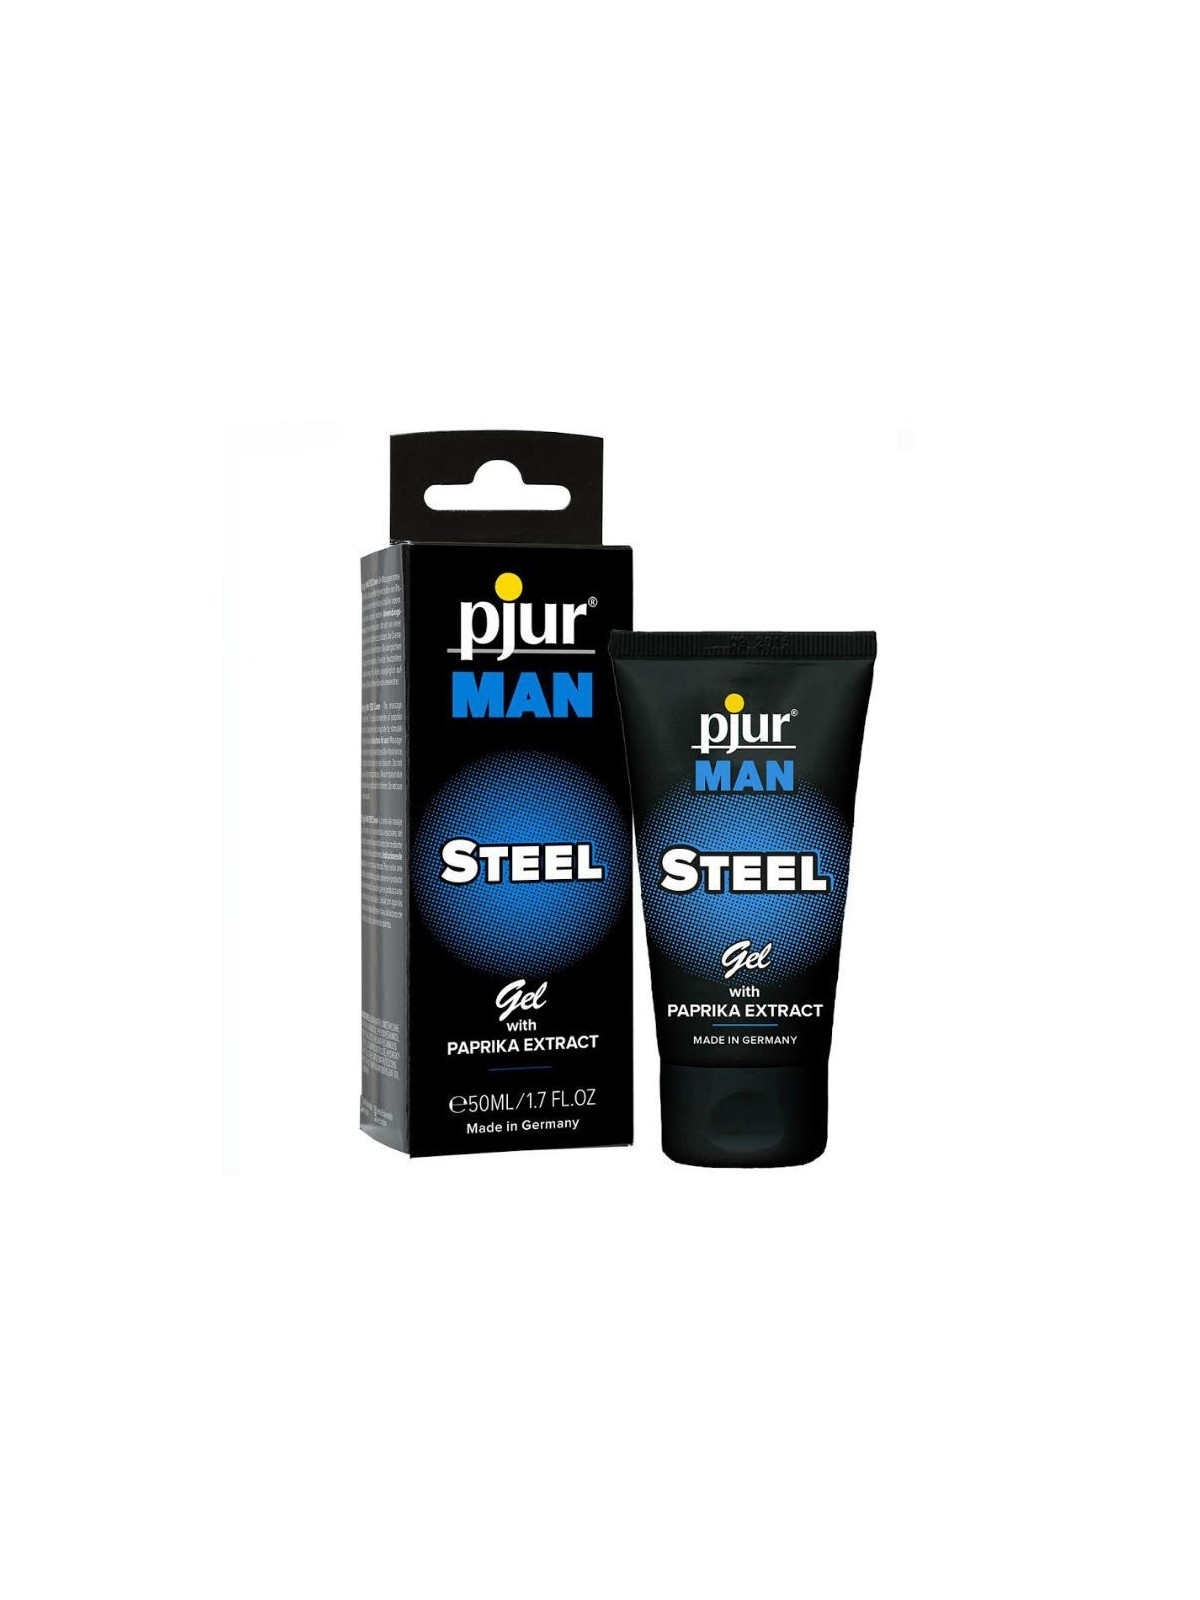 Pjur Man Steel Gel Estimulante - Comprar Potenciador erección Pjur - Potenciadores de erección (1)